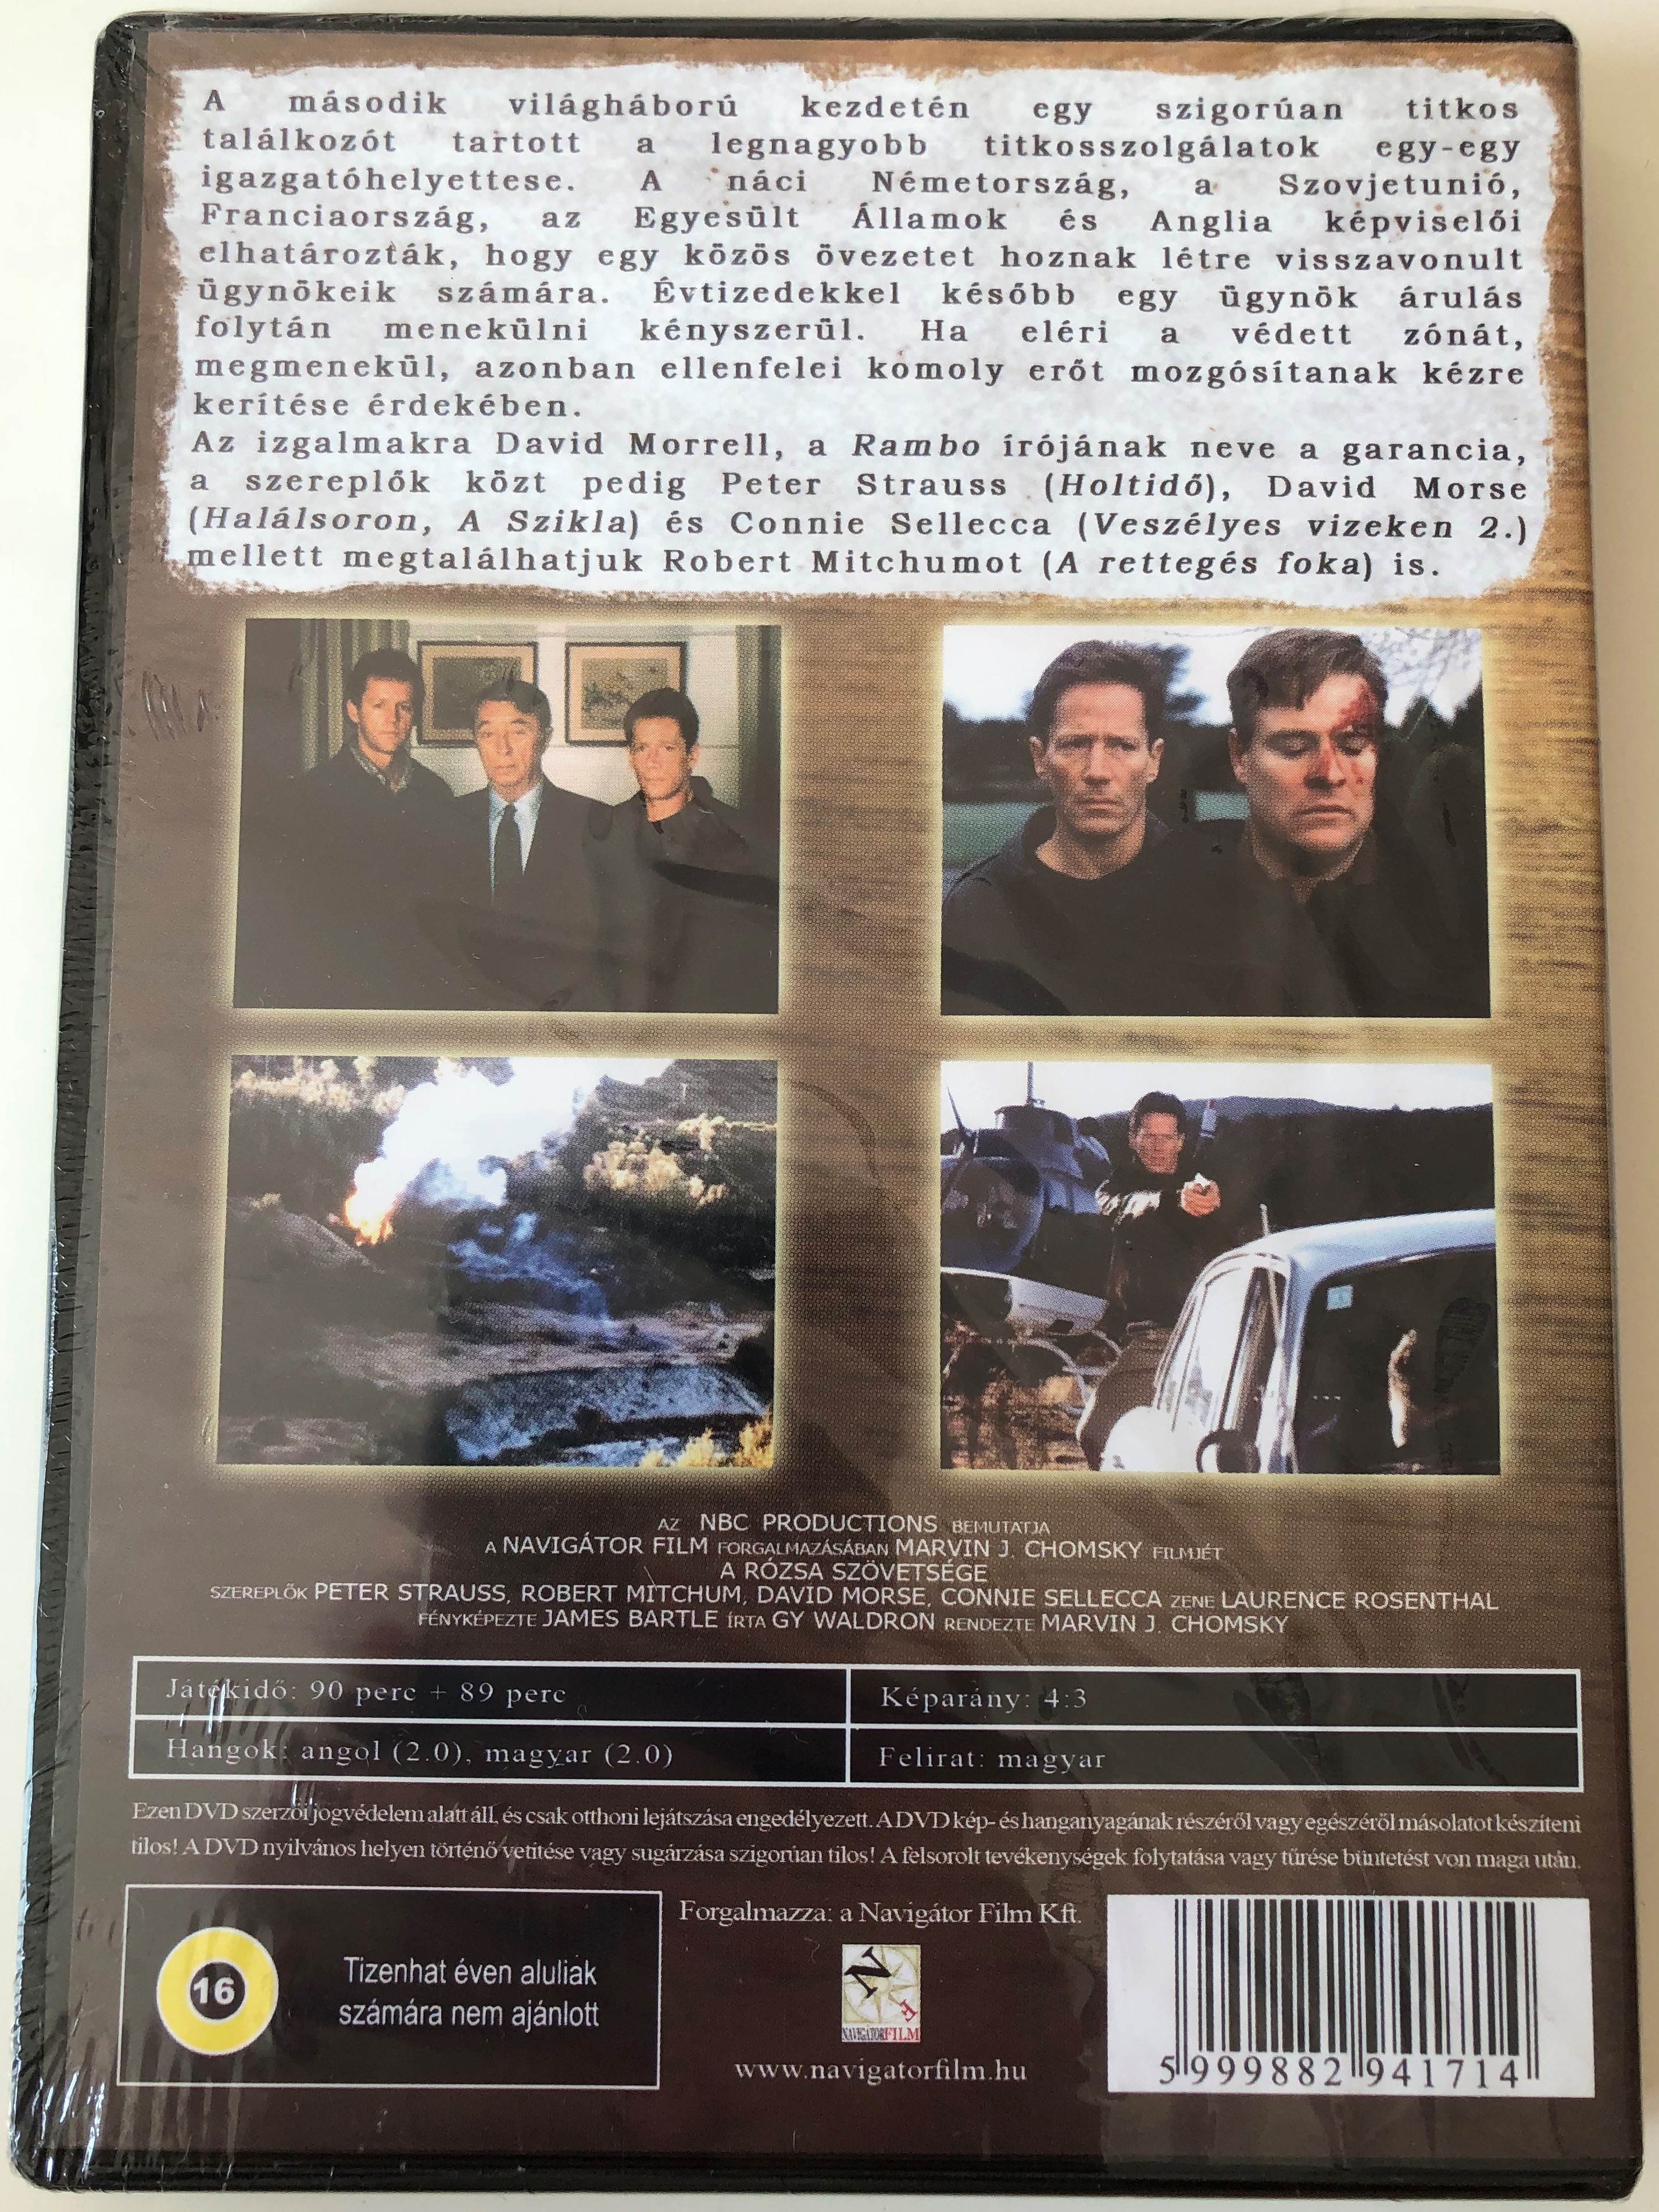 Brotherhood of the Rose DVD 1989 A Rózsa szövetsége / Directed by Marvin J.  Chomsky / Starring: Peter Strauss, Robert Mitchum, David Morse, Connie  Sellecca - bibleinmylanguage